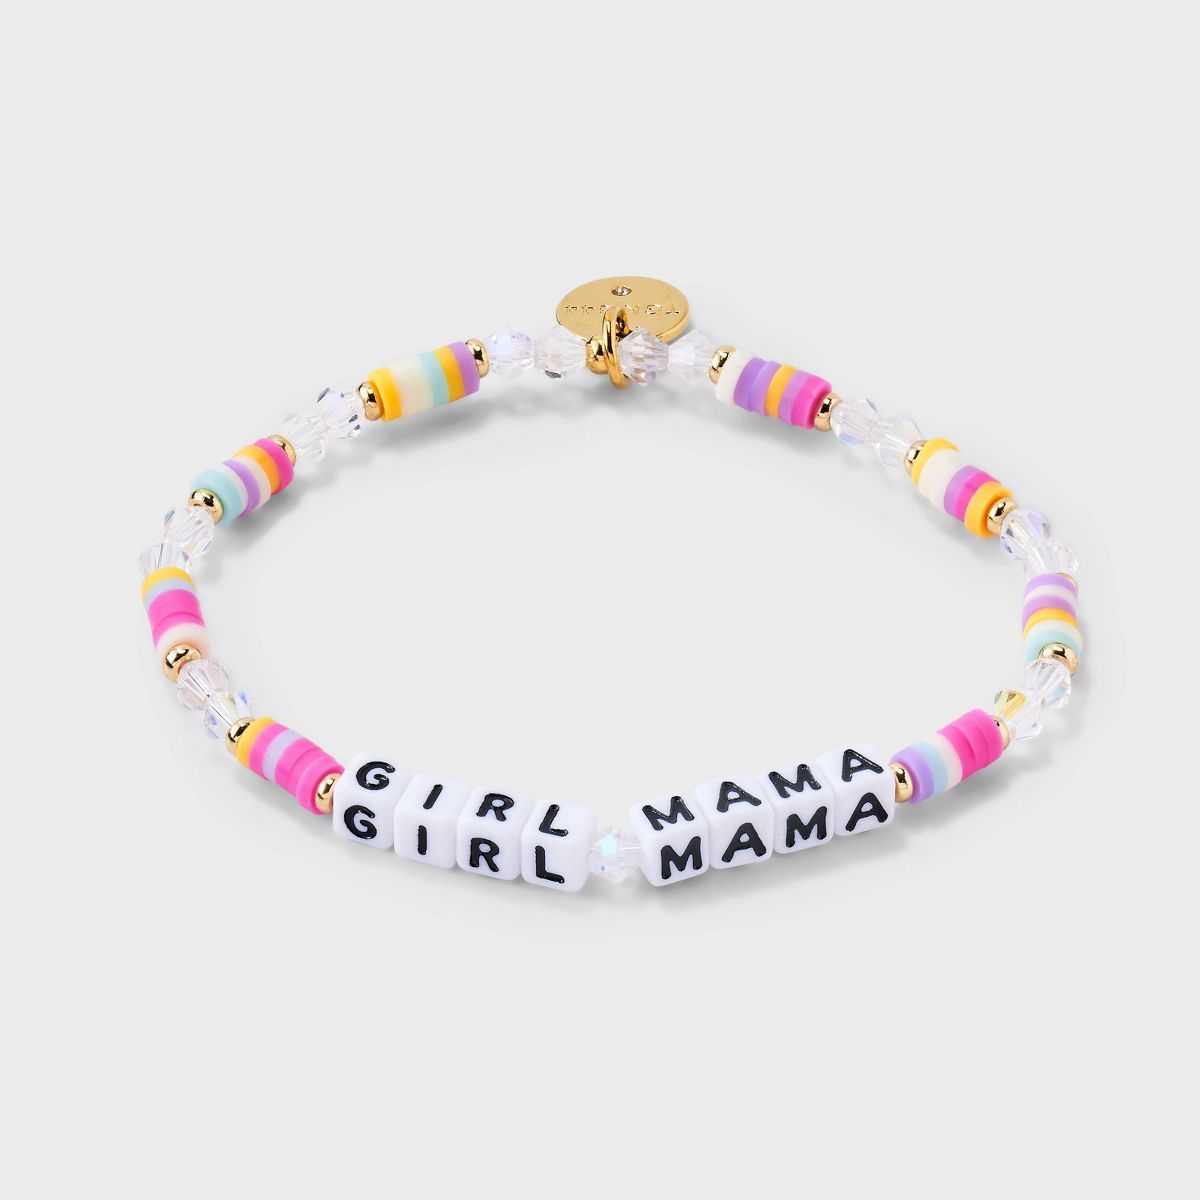 Little Words Project Girl Mama Bracelet | Target